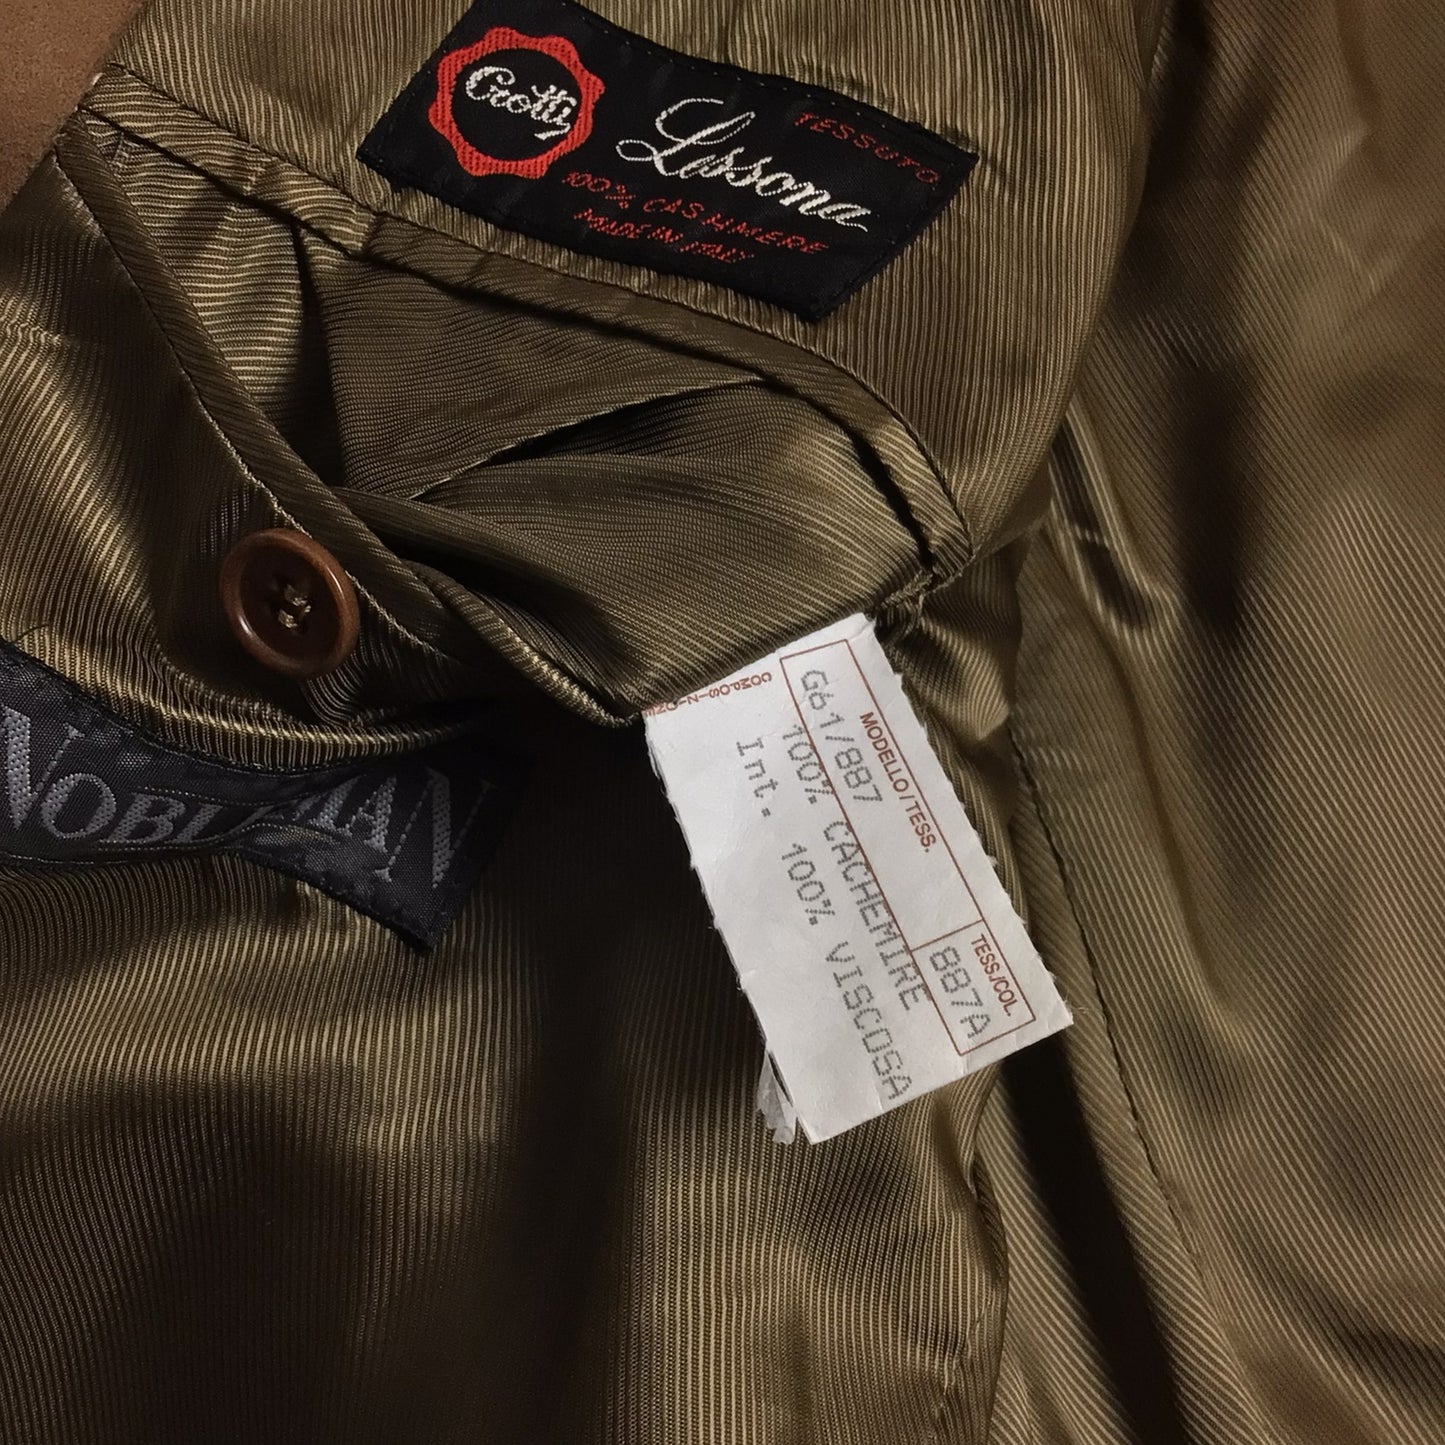 Nobleman Lessona Tan Brown Blazer Jacket 100% Cashmere Size 56